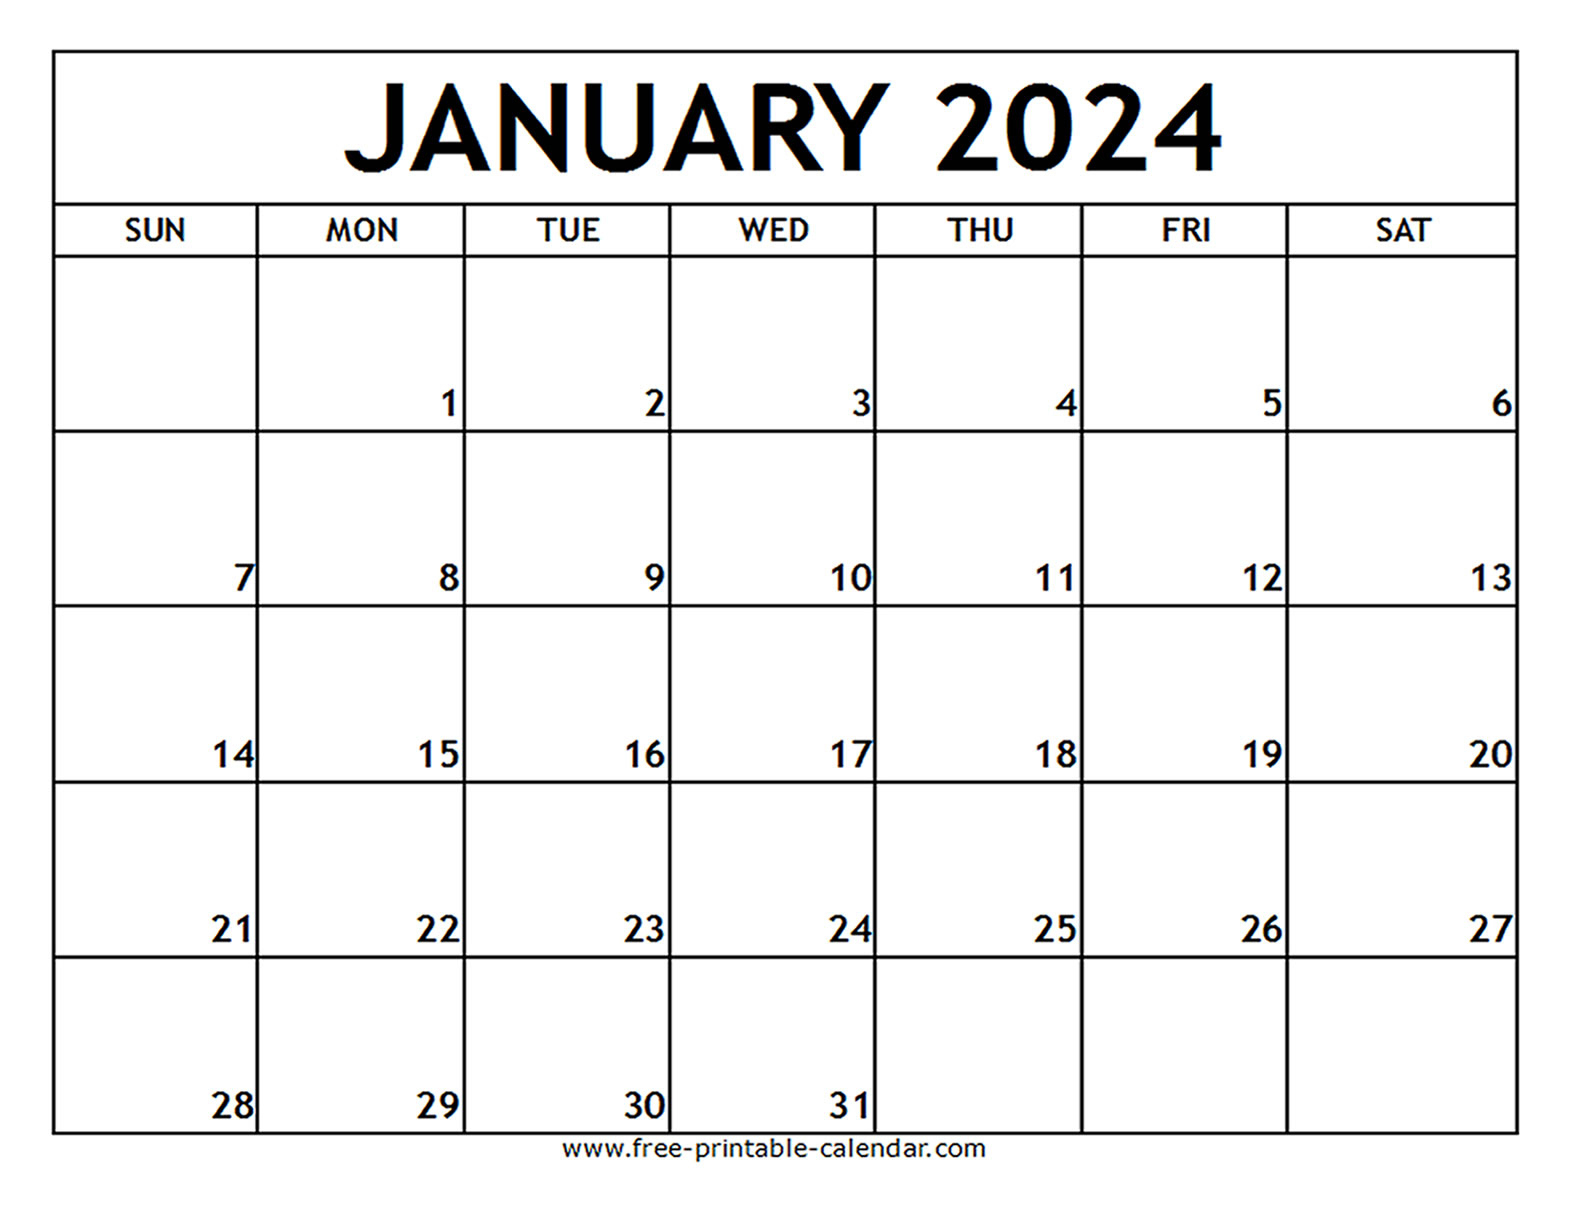 January 2024 Printable Calendar - Free-Printable-Calendar | Free Calendar 2024